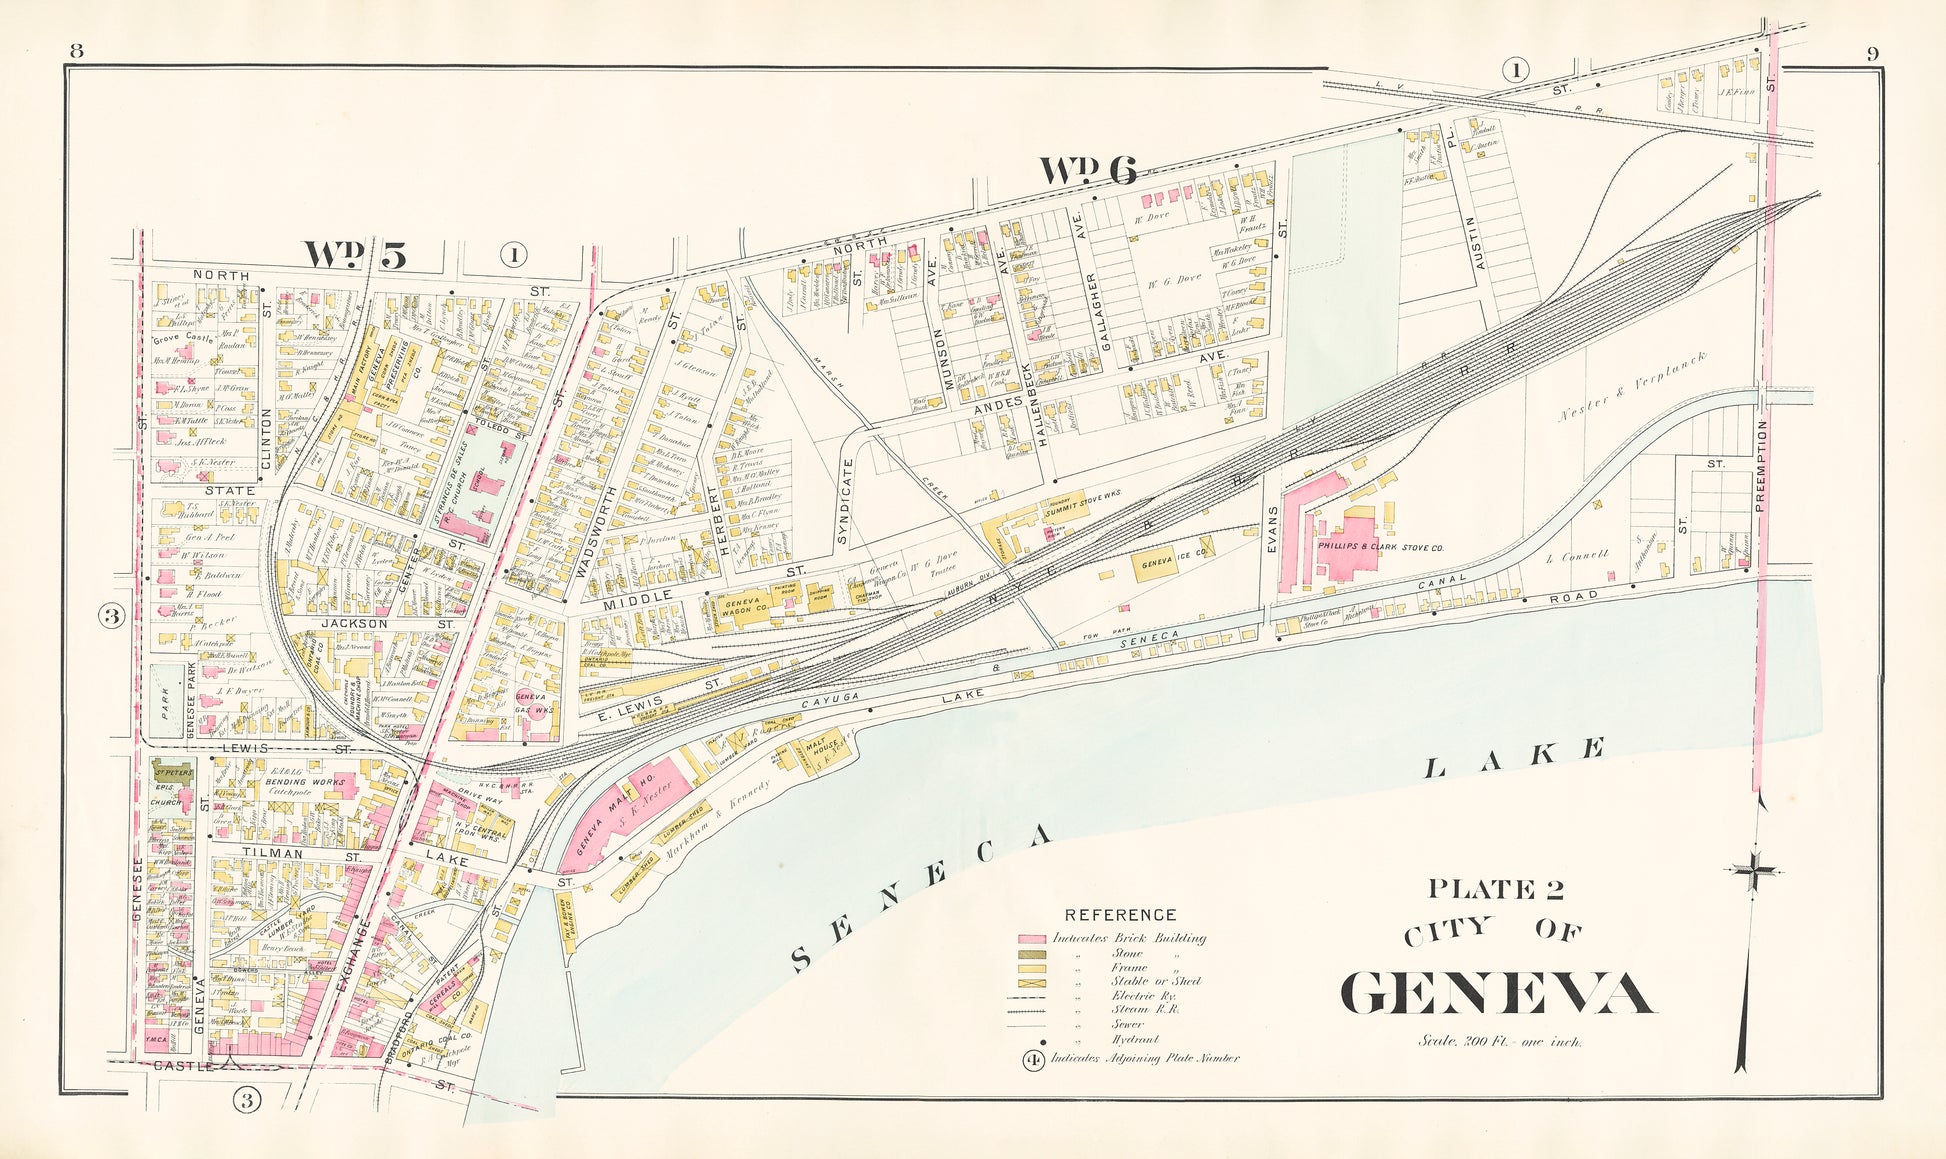 City of Geneva - Plate 2 - Print - Stomping Grounds